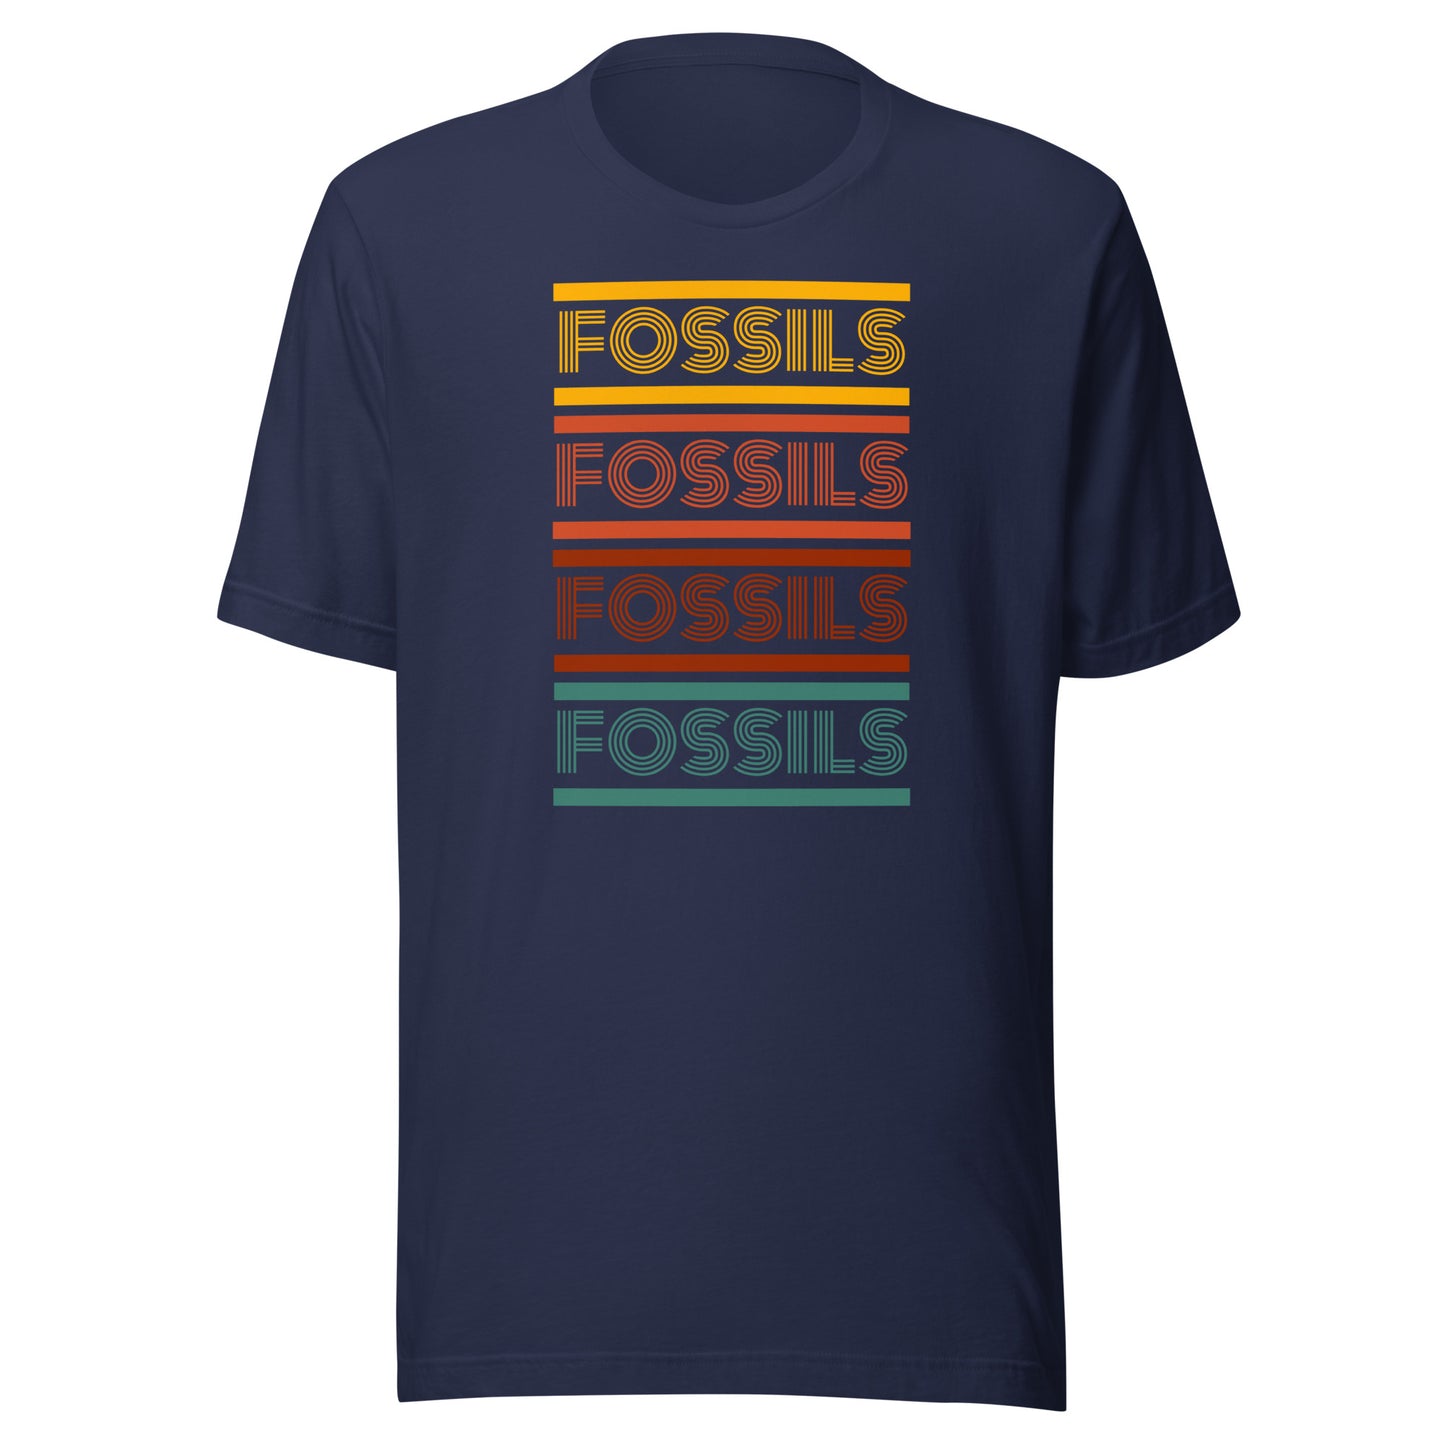 Fossils Fossils Fossils T-Shirt (Unisex)